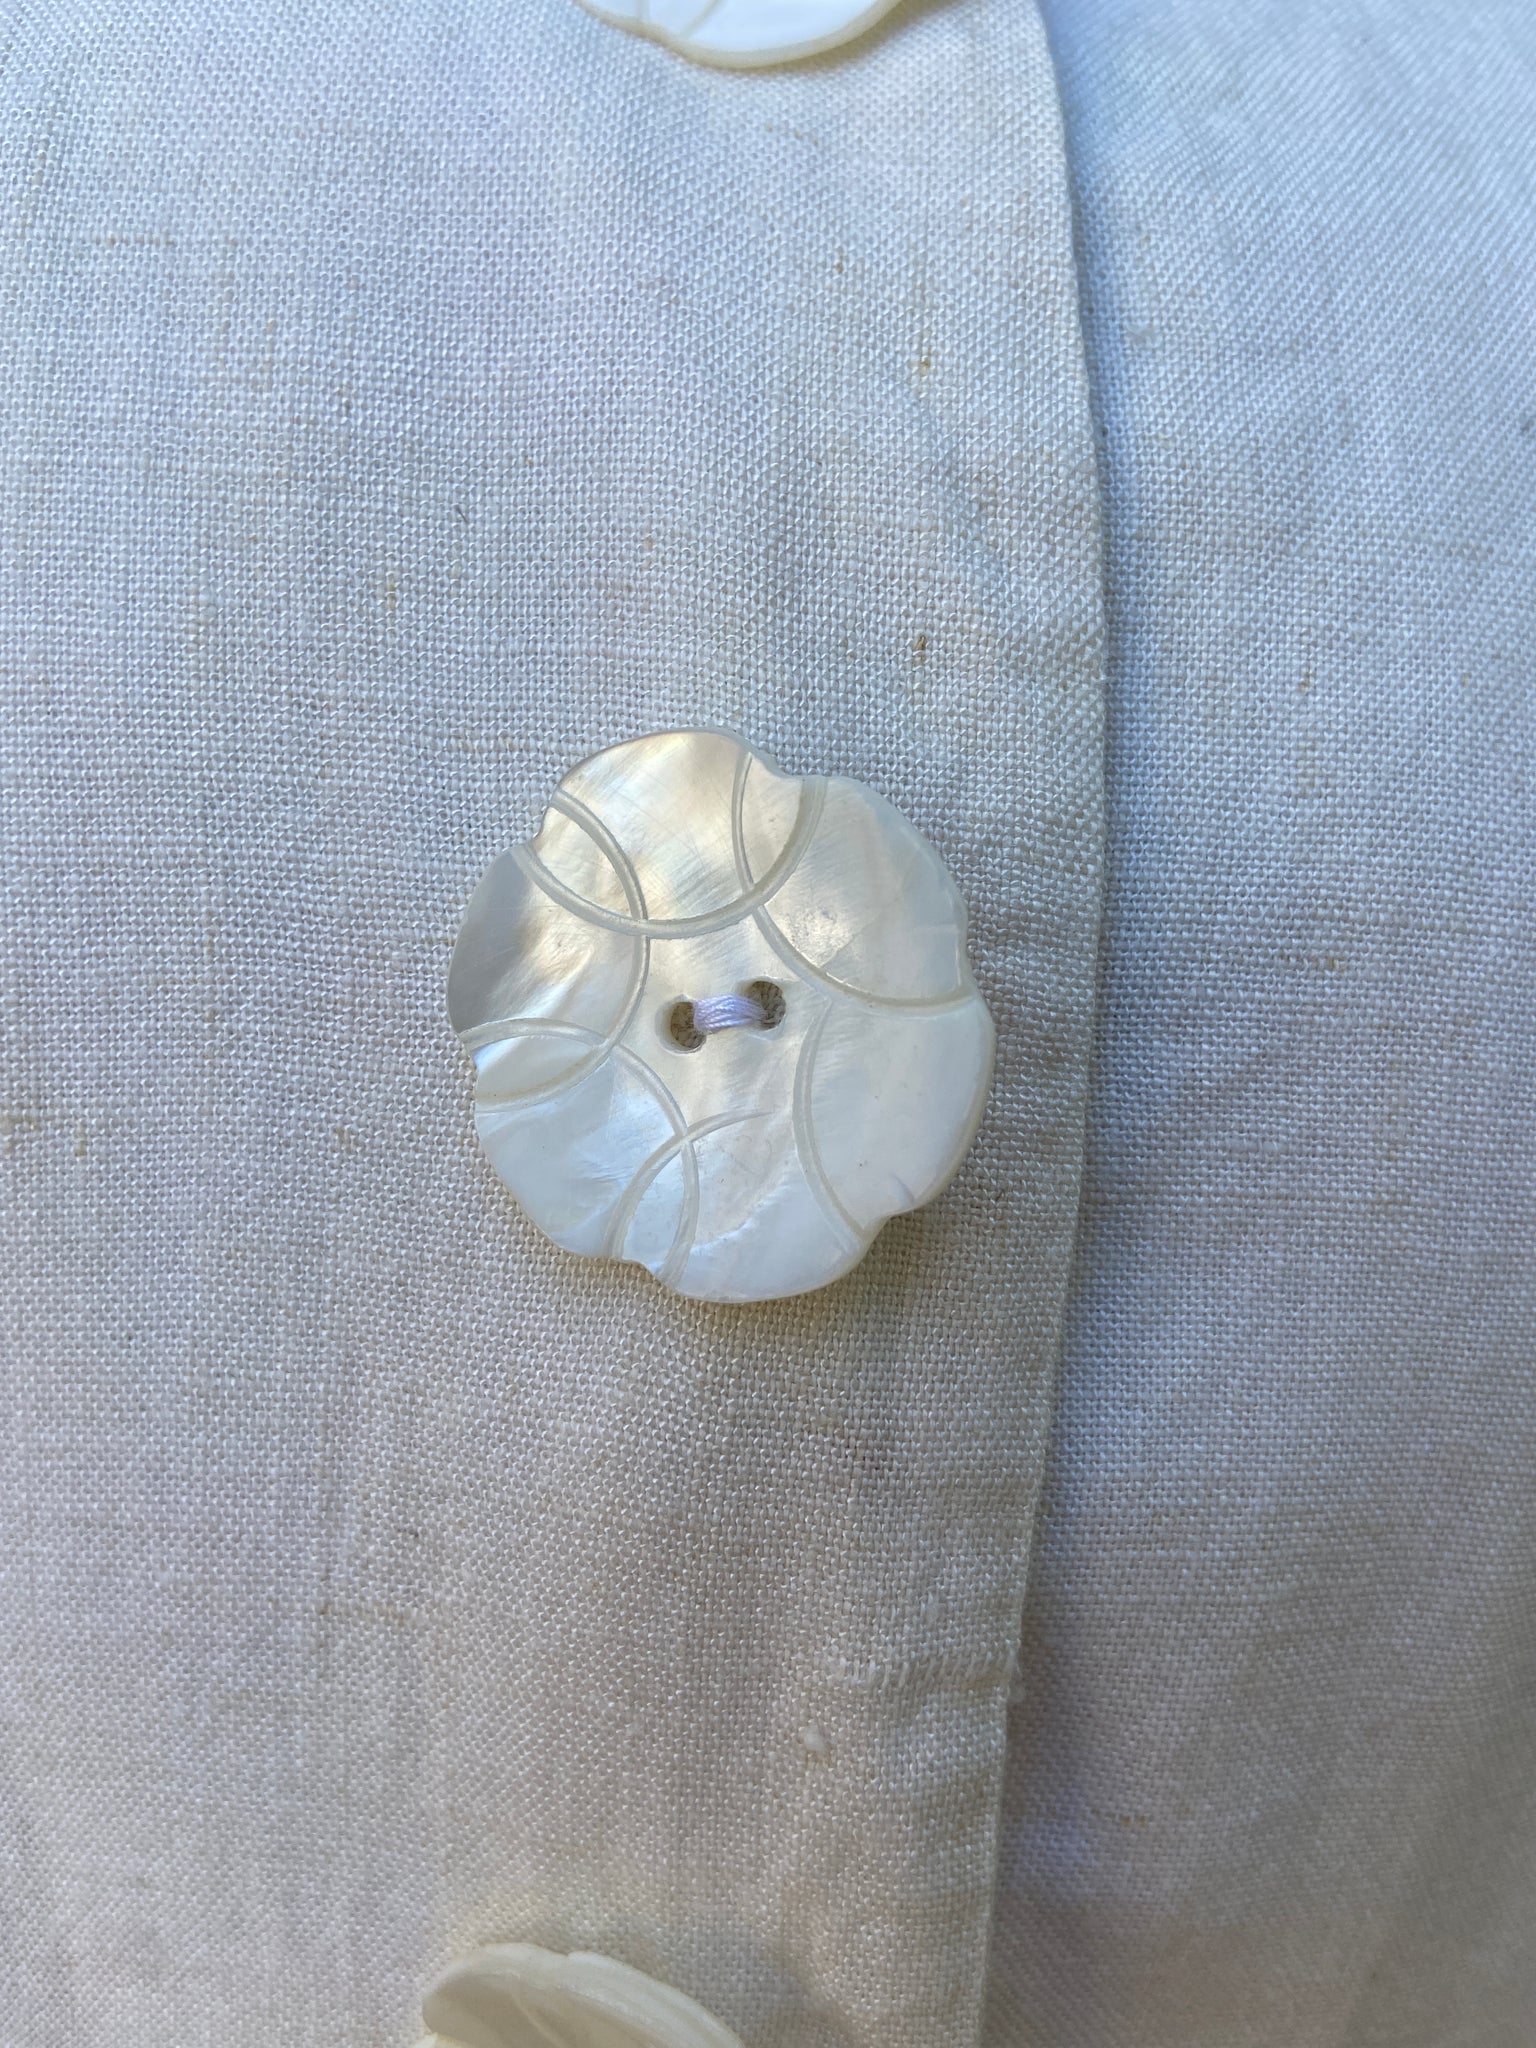 Carved MOP Flower Button 1930s Rayon Gabardine Day Dress